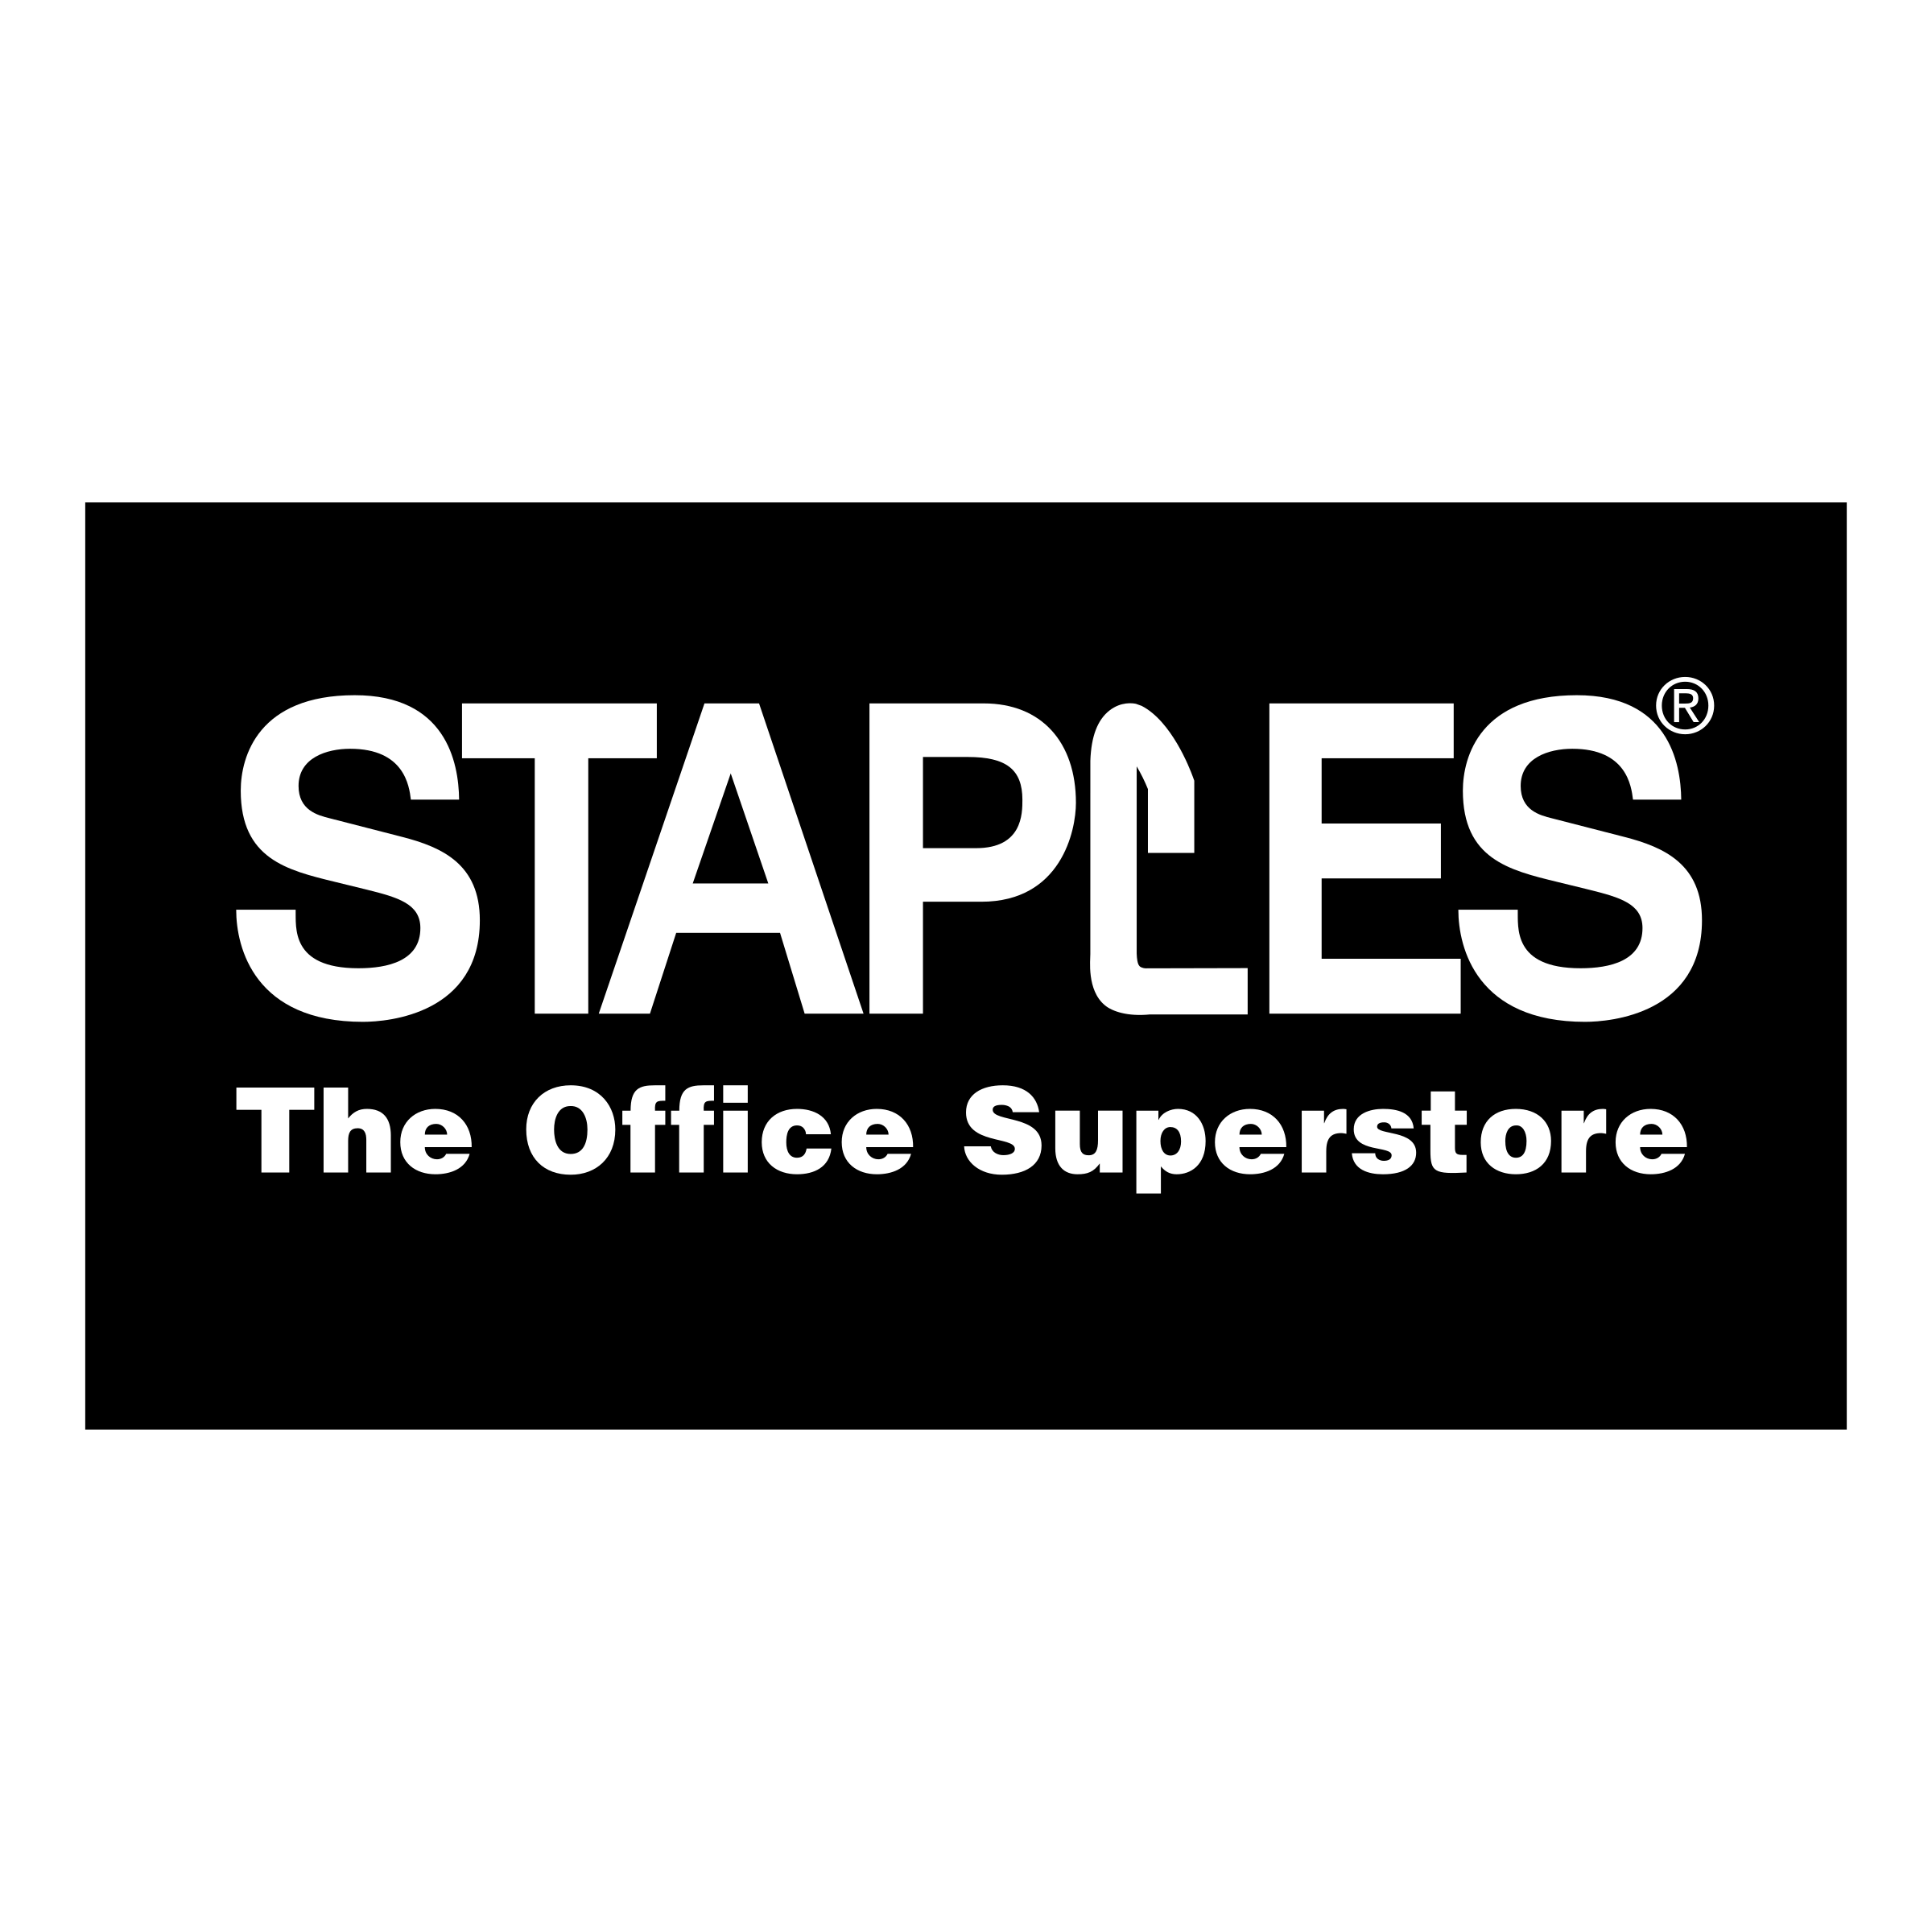 Staples Logo - Staples Logo PNG Transparent & SVG Vector - Freebie Supply